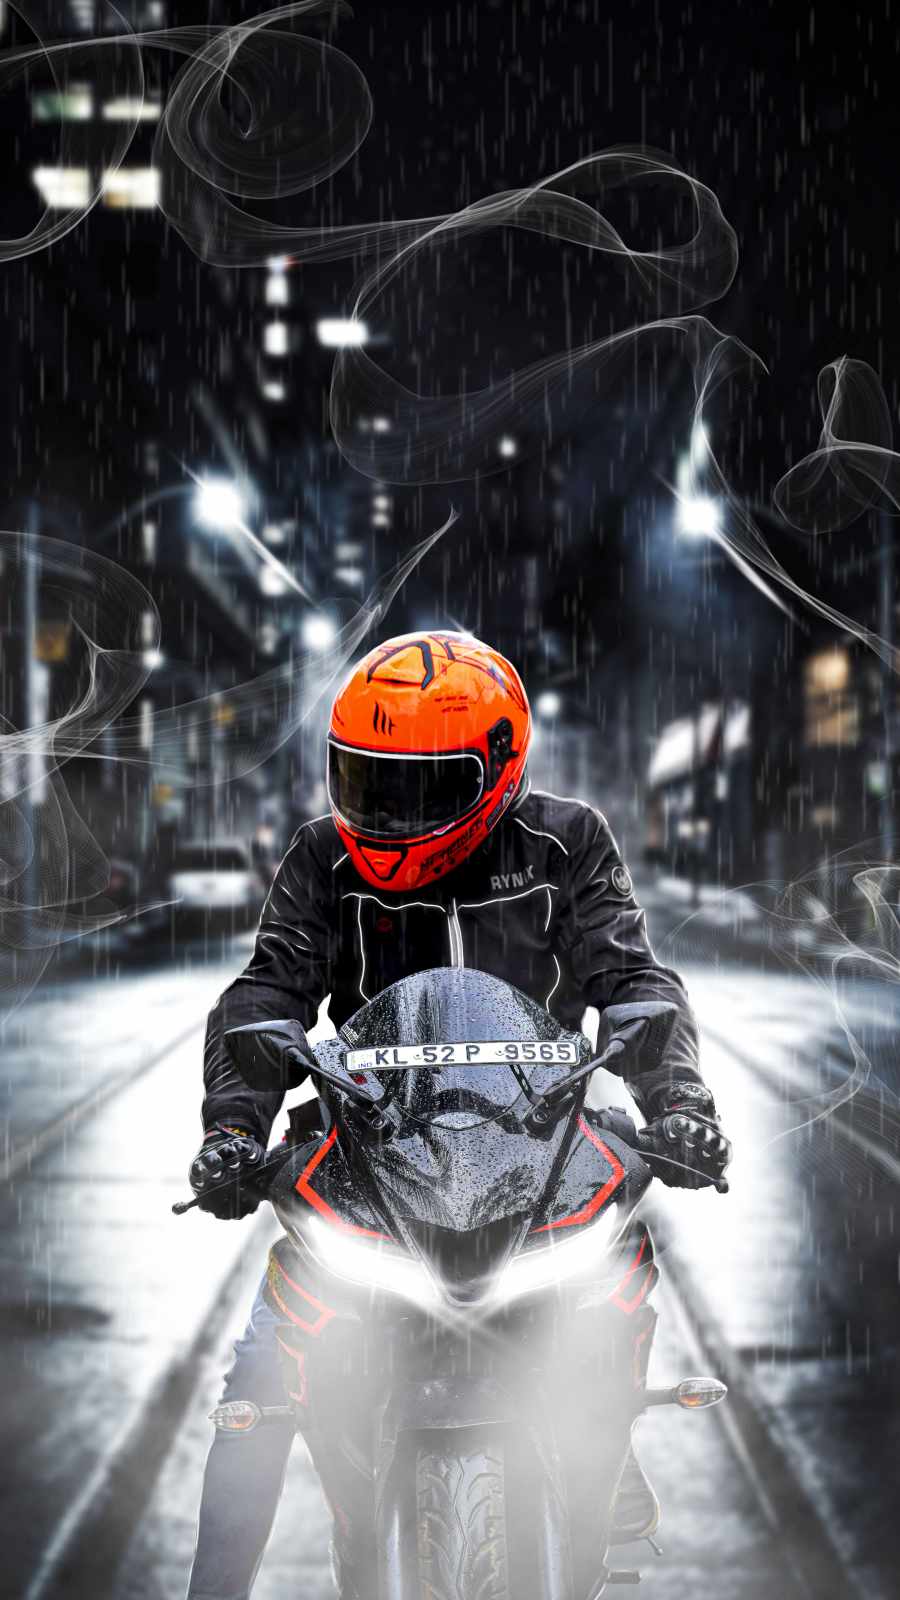 Night Rider iPhone Wallpaper